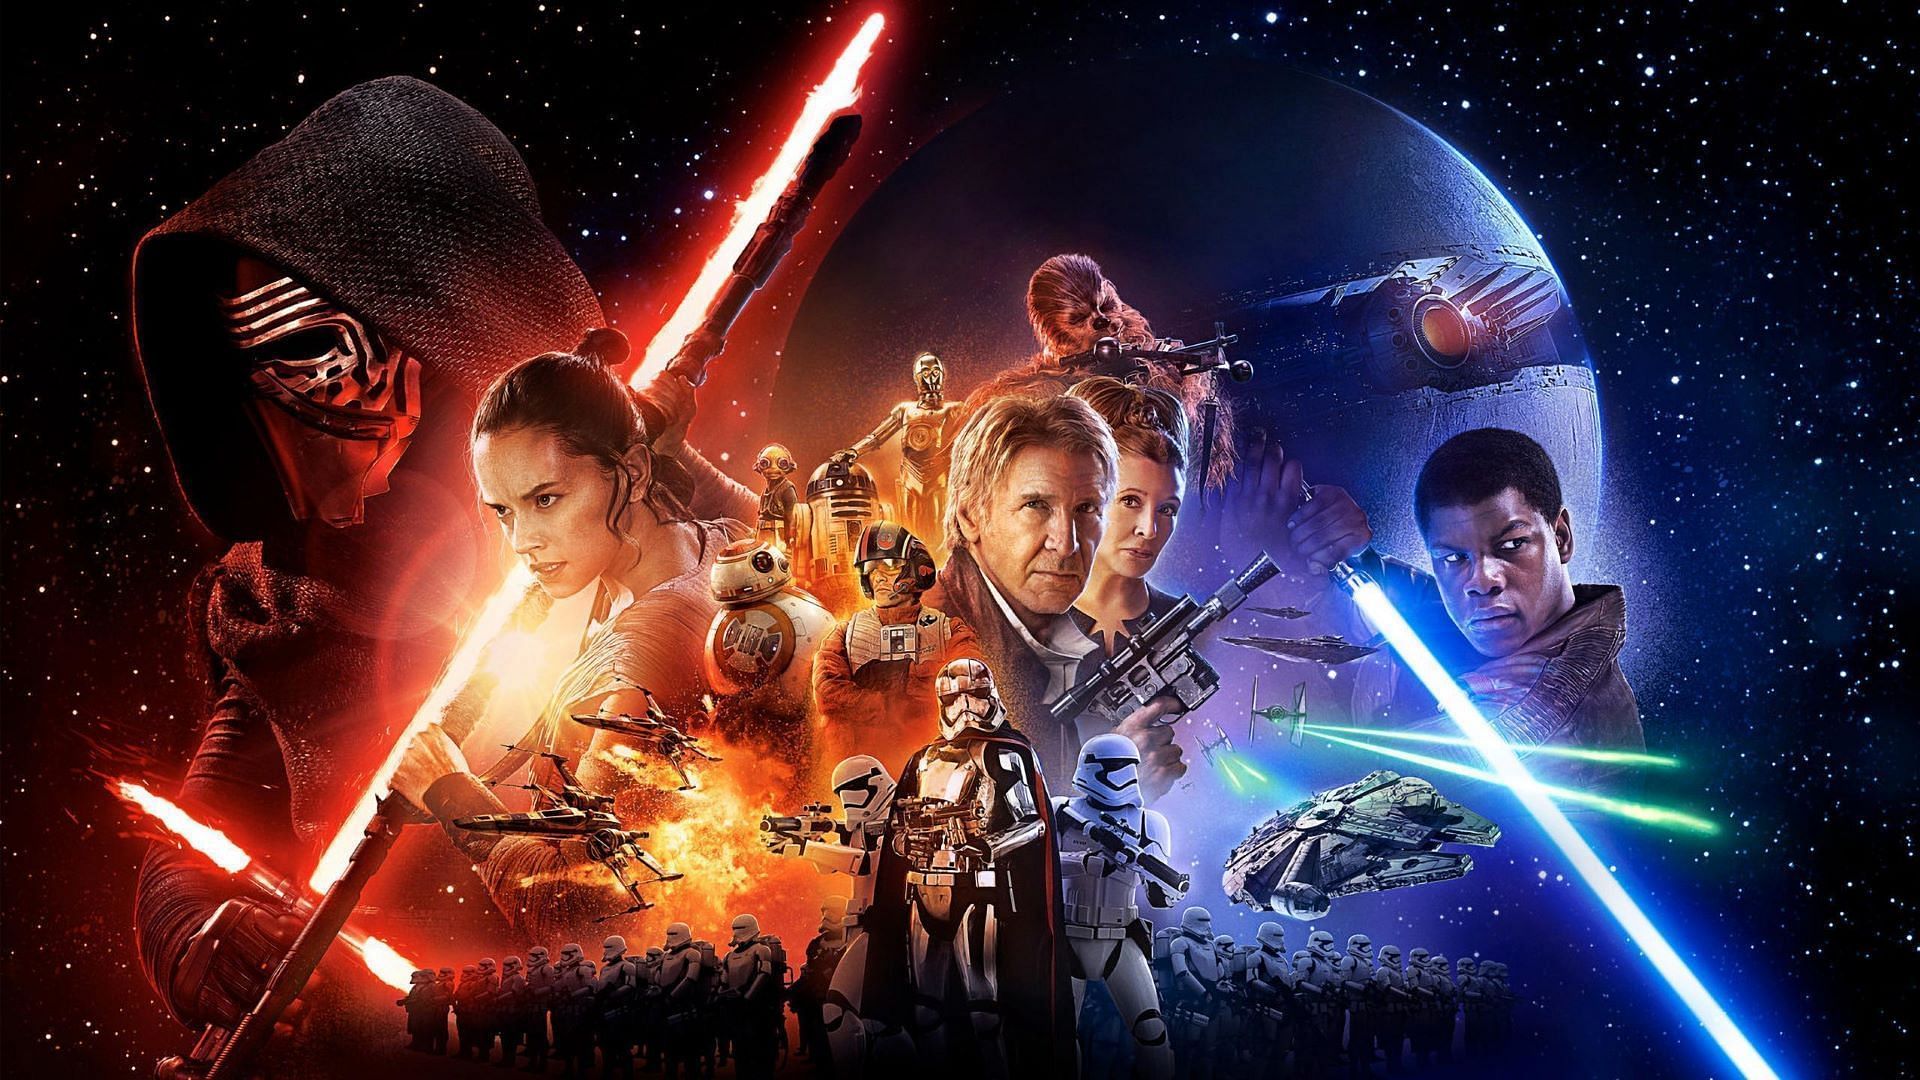 Star Wars: The Force Awakens (Image via 20th Century Studios)